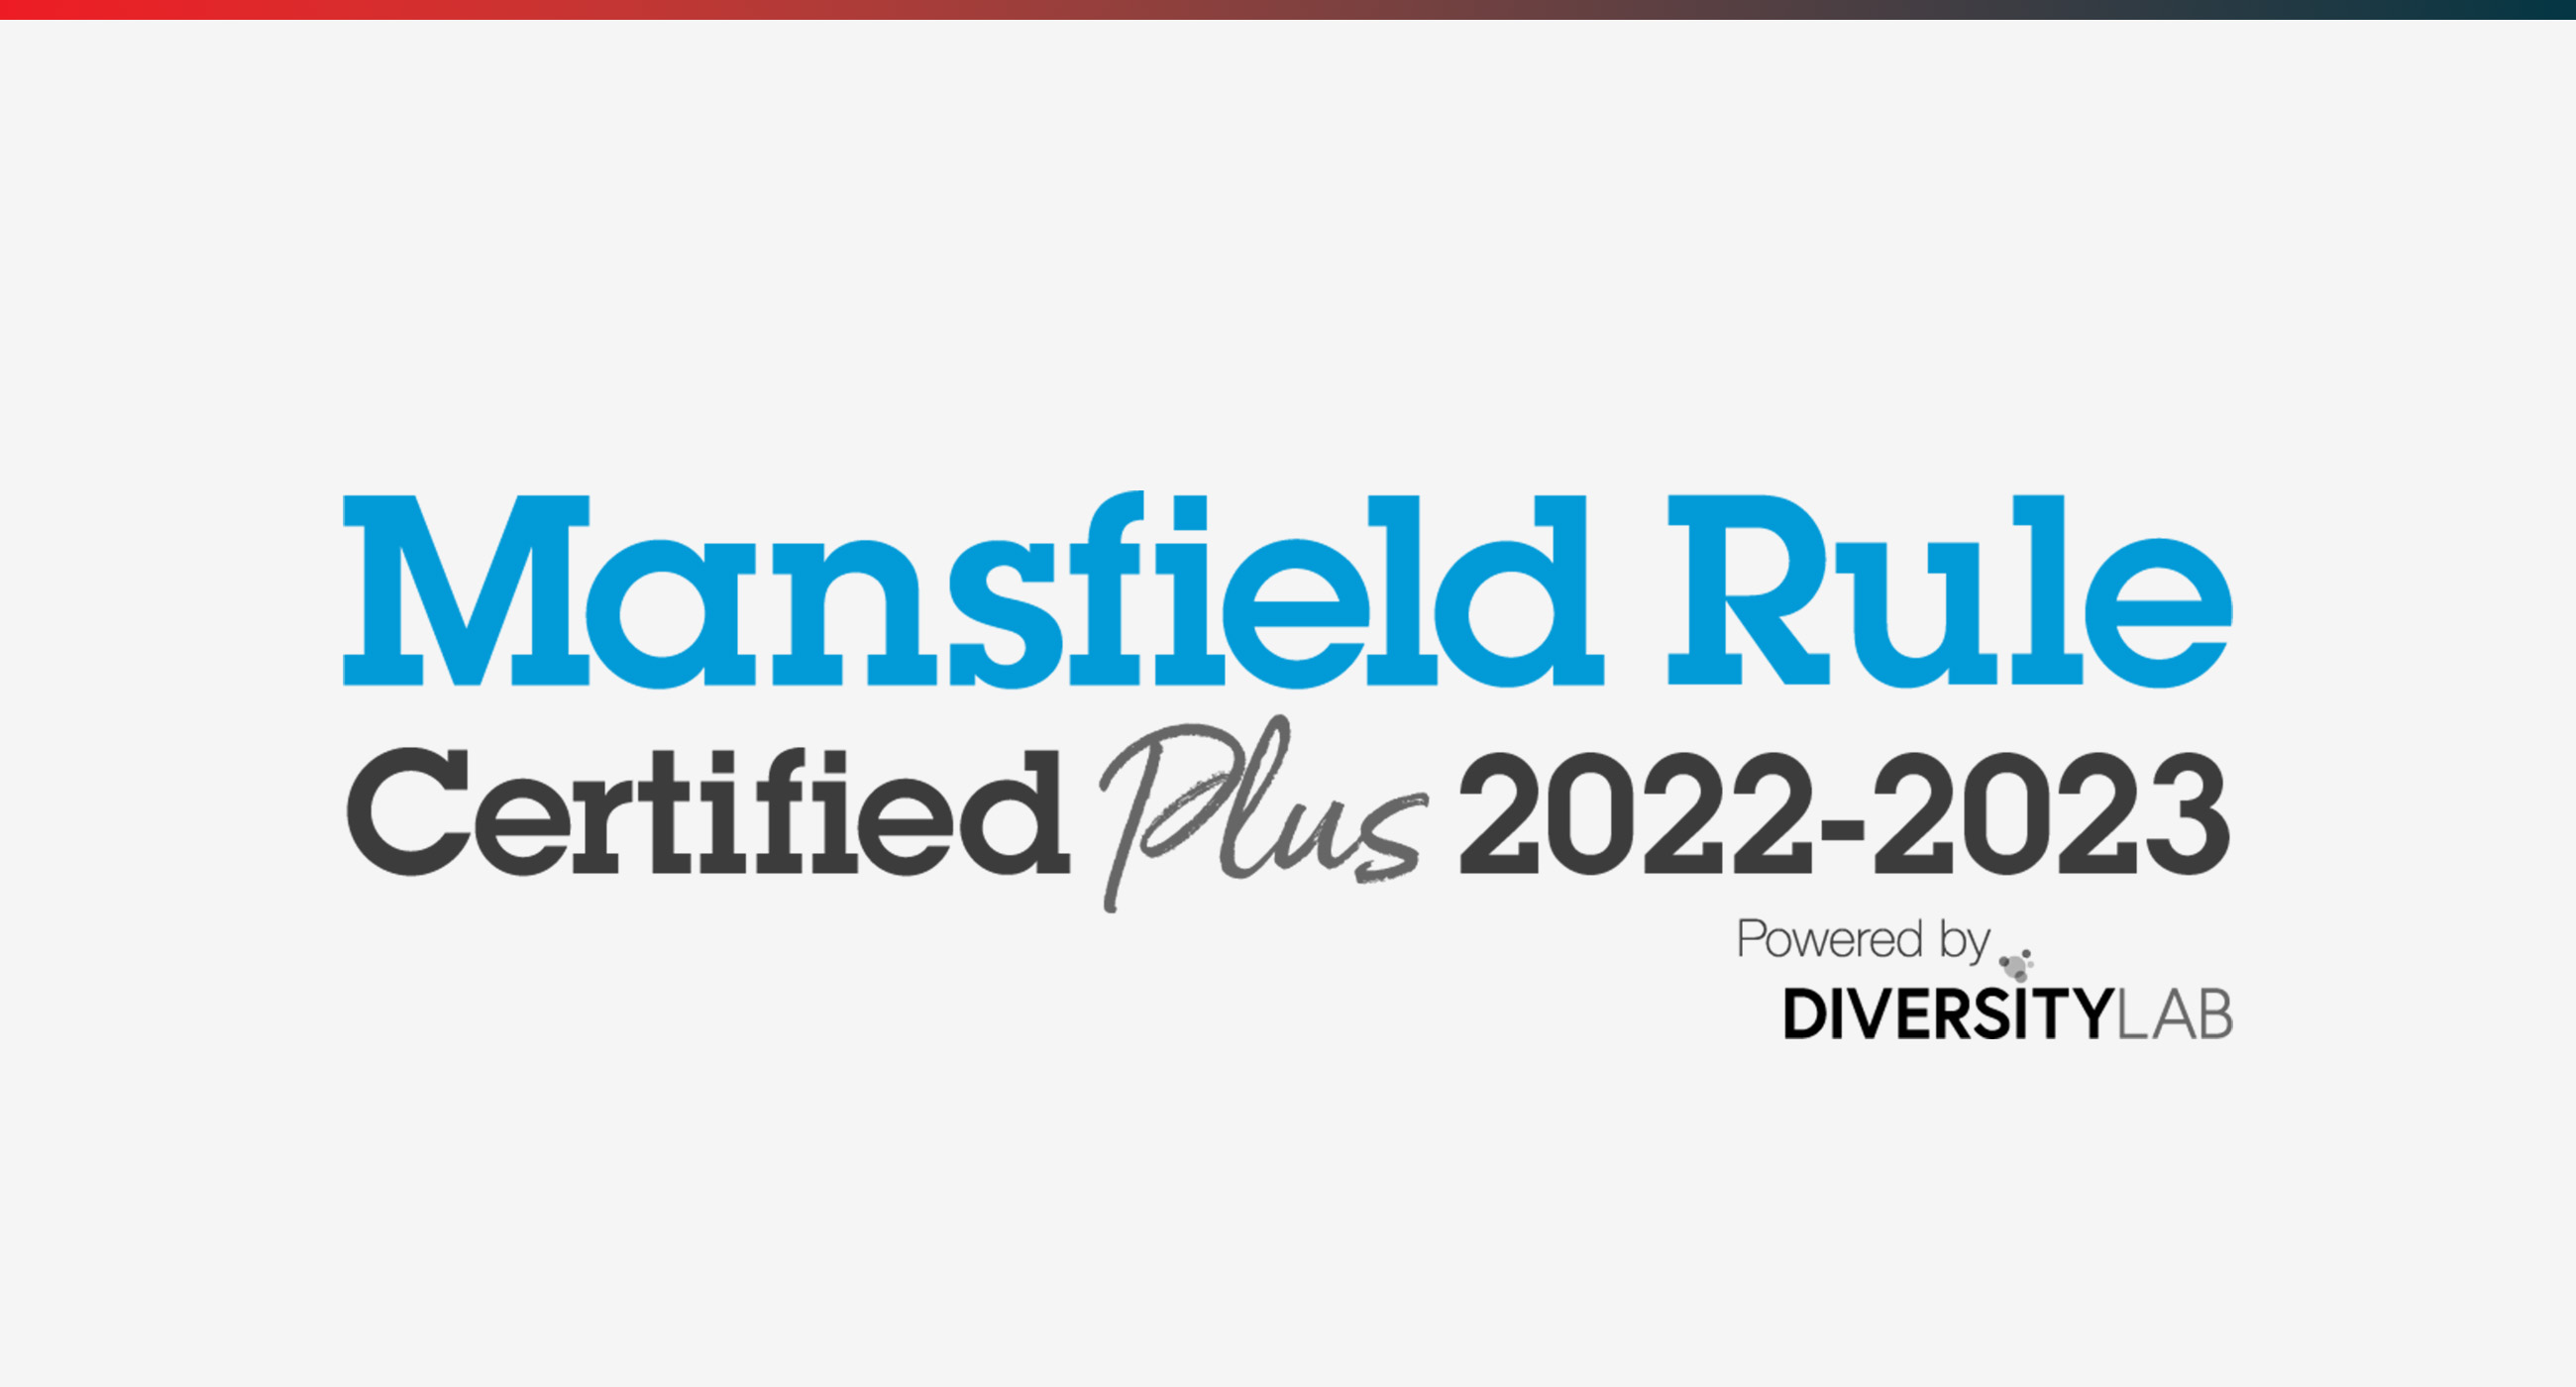 Mansfield Rule Certified Plus 2022-2023